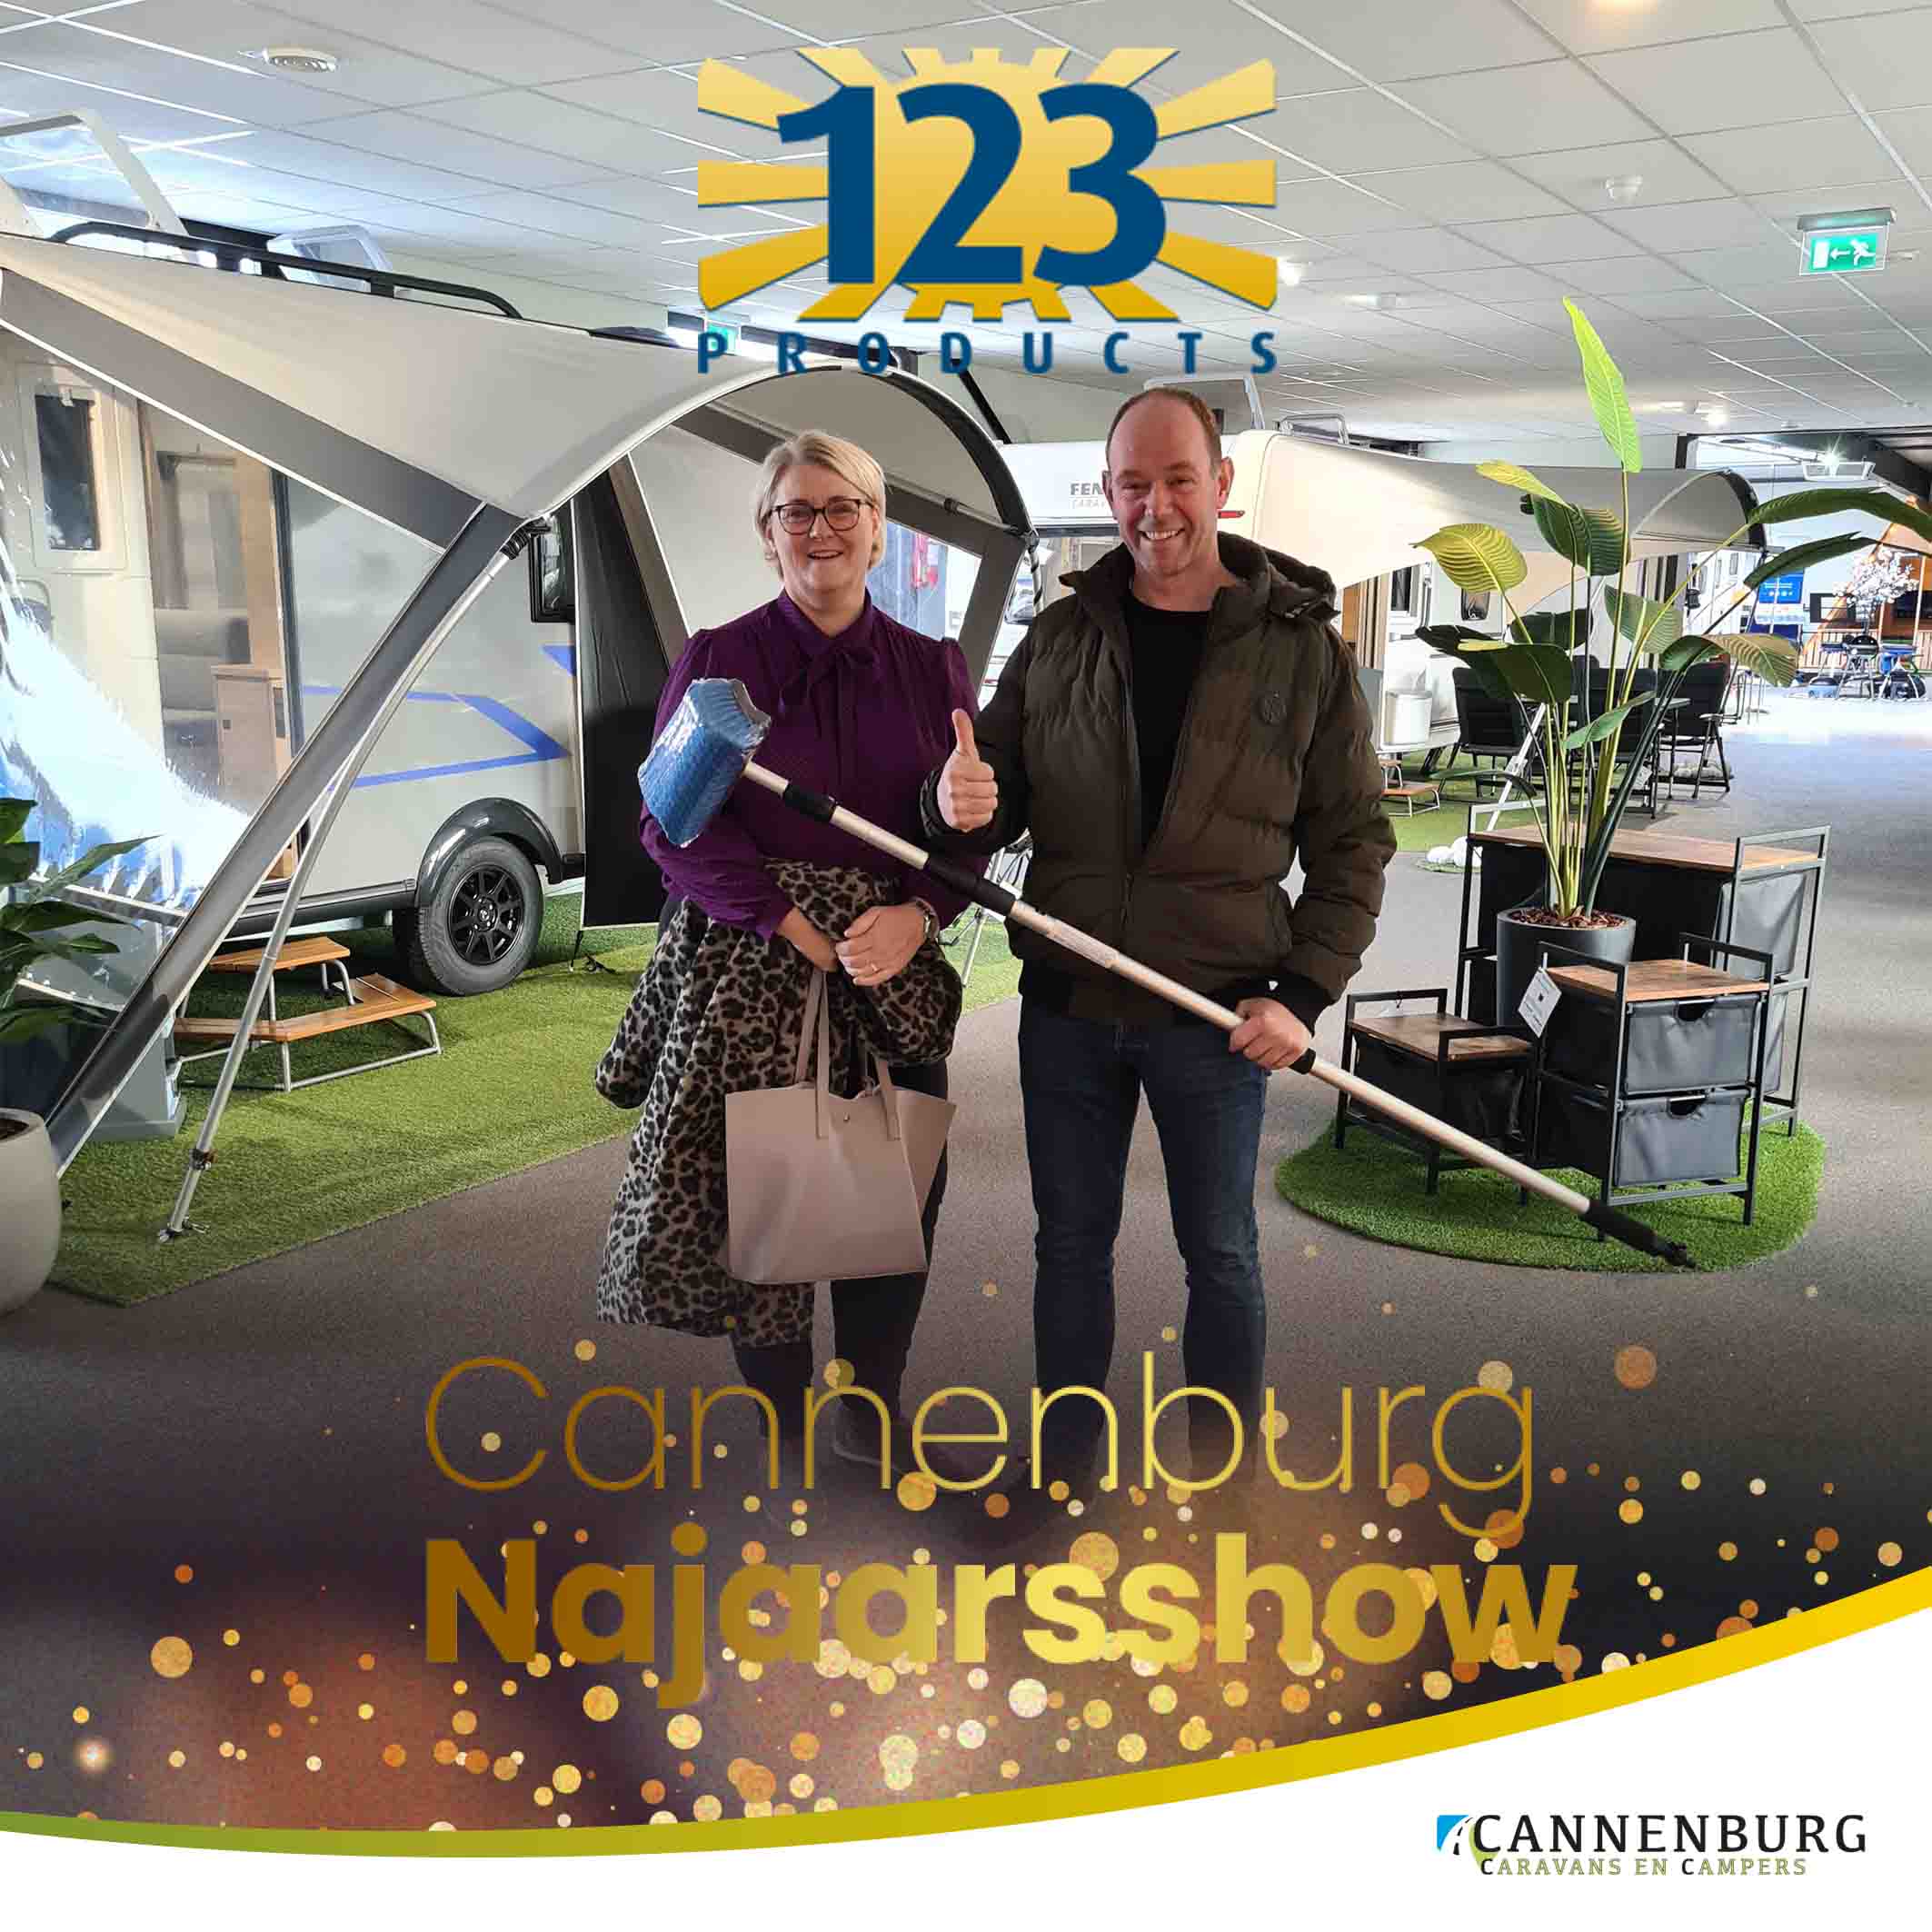 facebook bericht winnaar Cannenburg Najaarsshow 123-products klein formaat